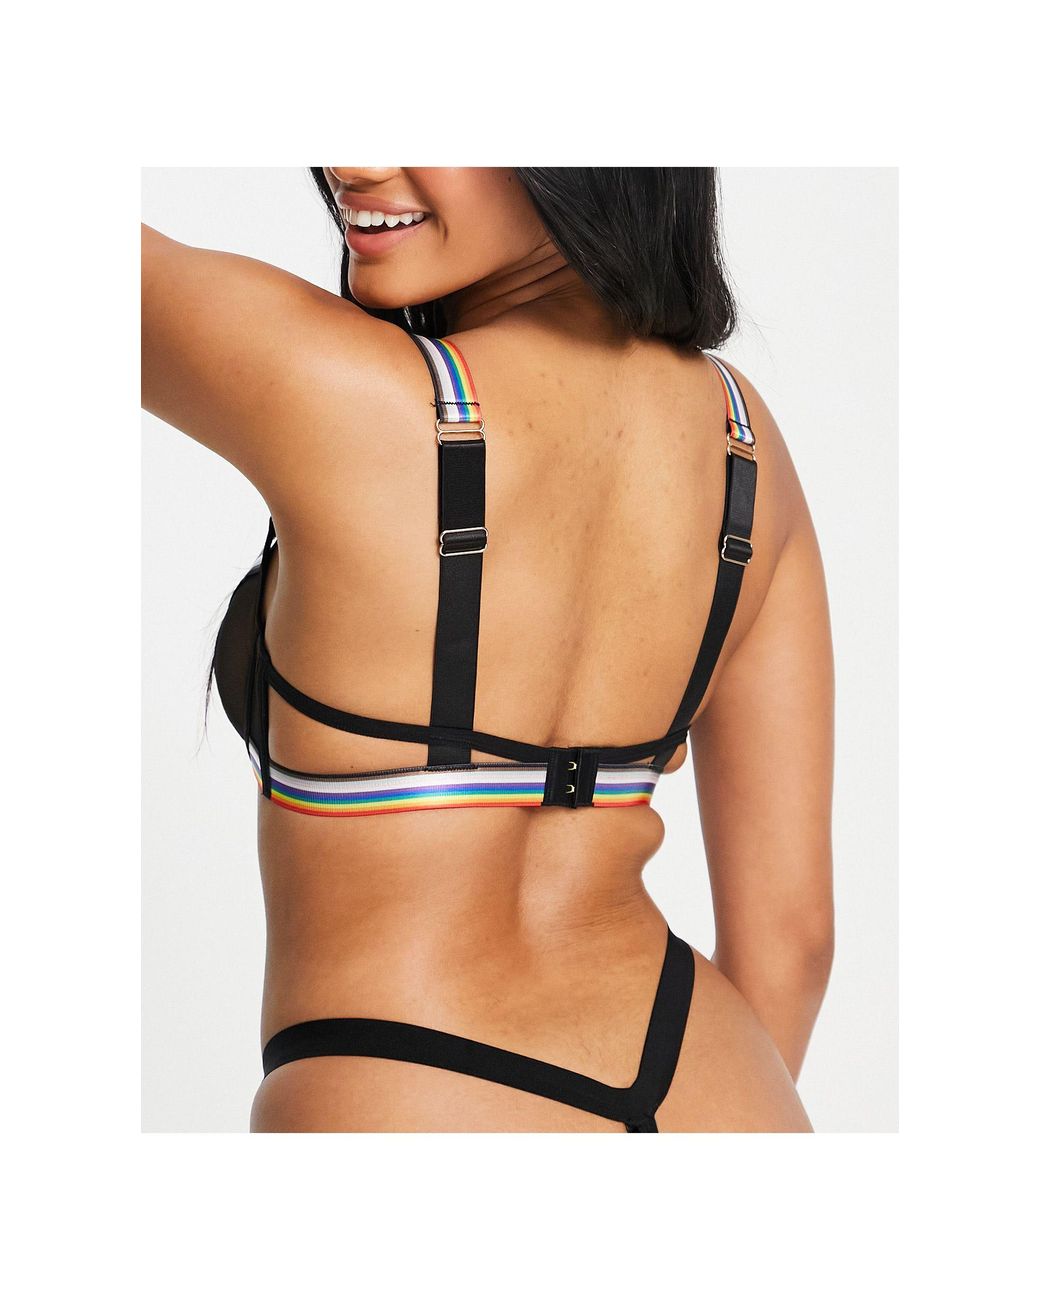 Bluebella Sadie mesh sheer lingerie set with logo elastic detail in